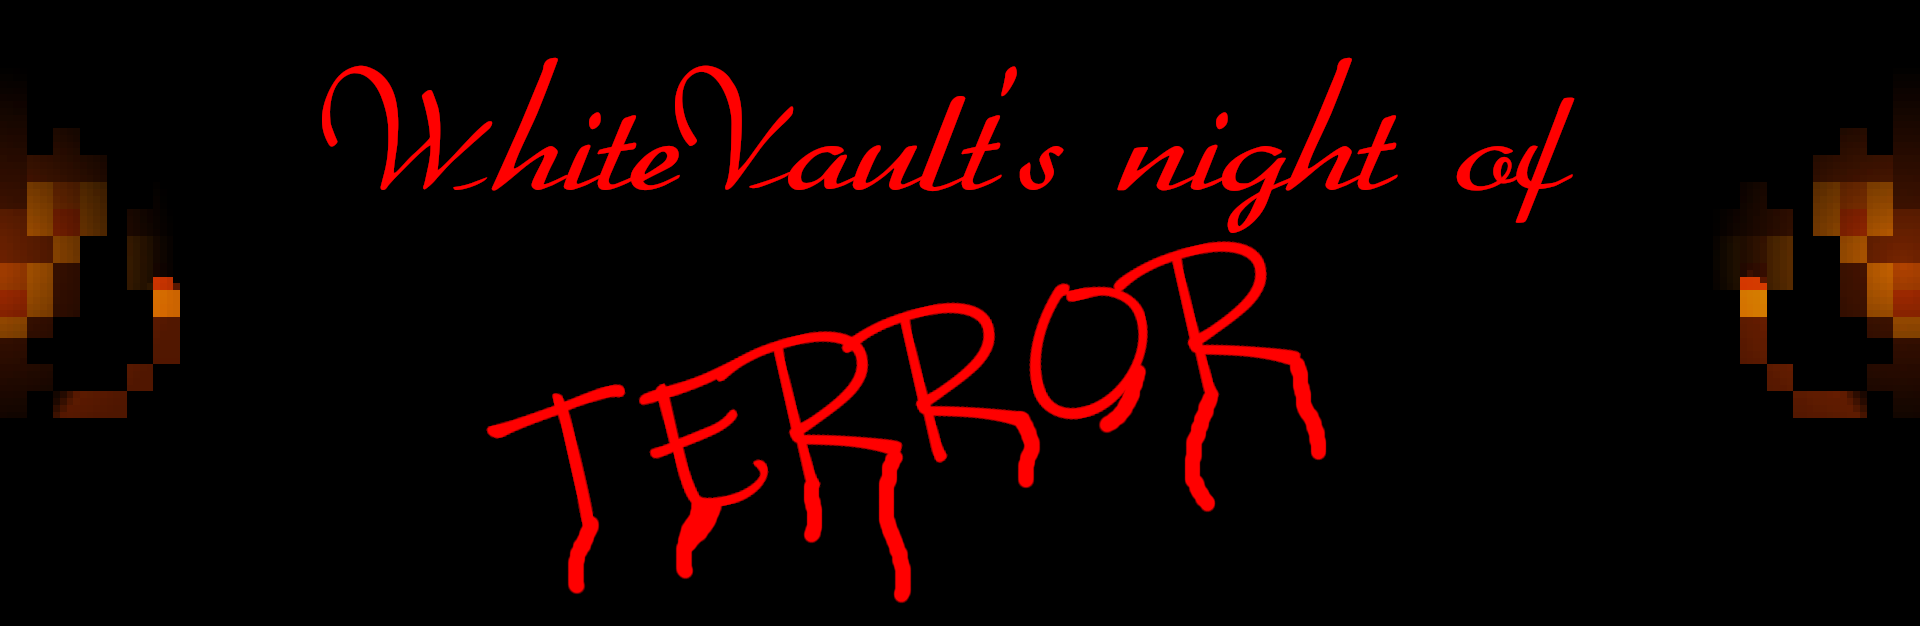 WhiteVault's night of terror!